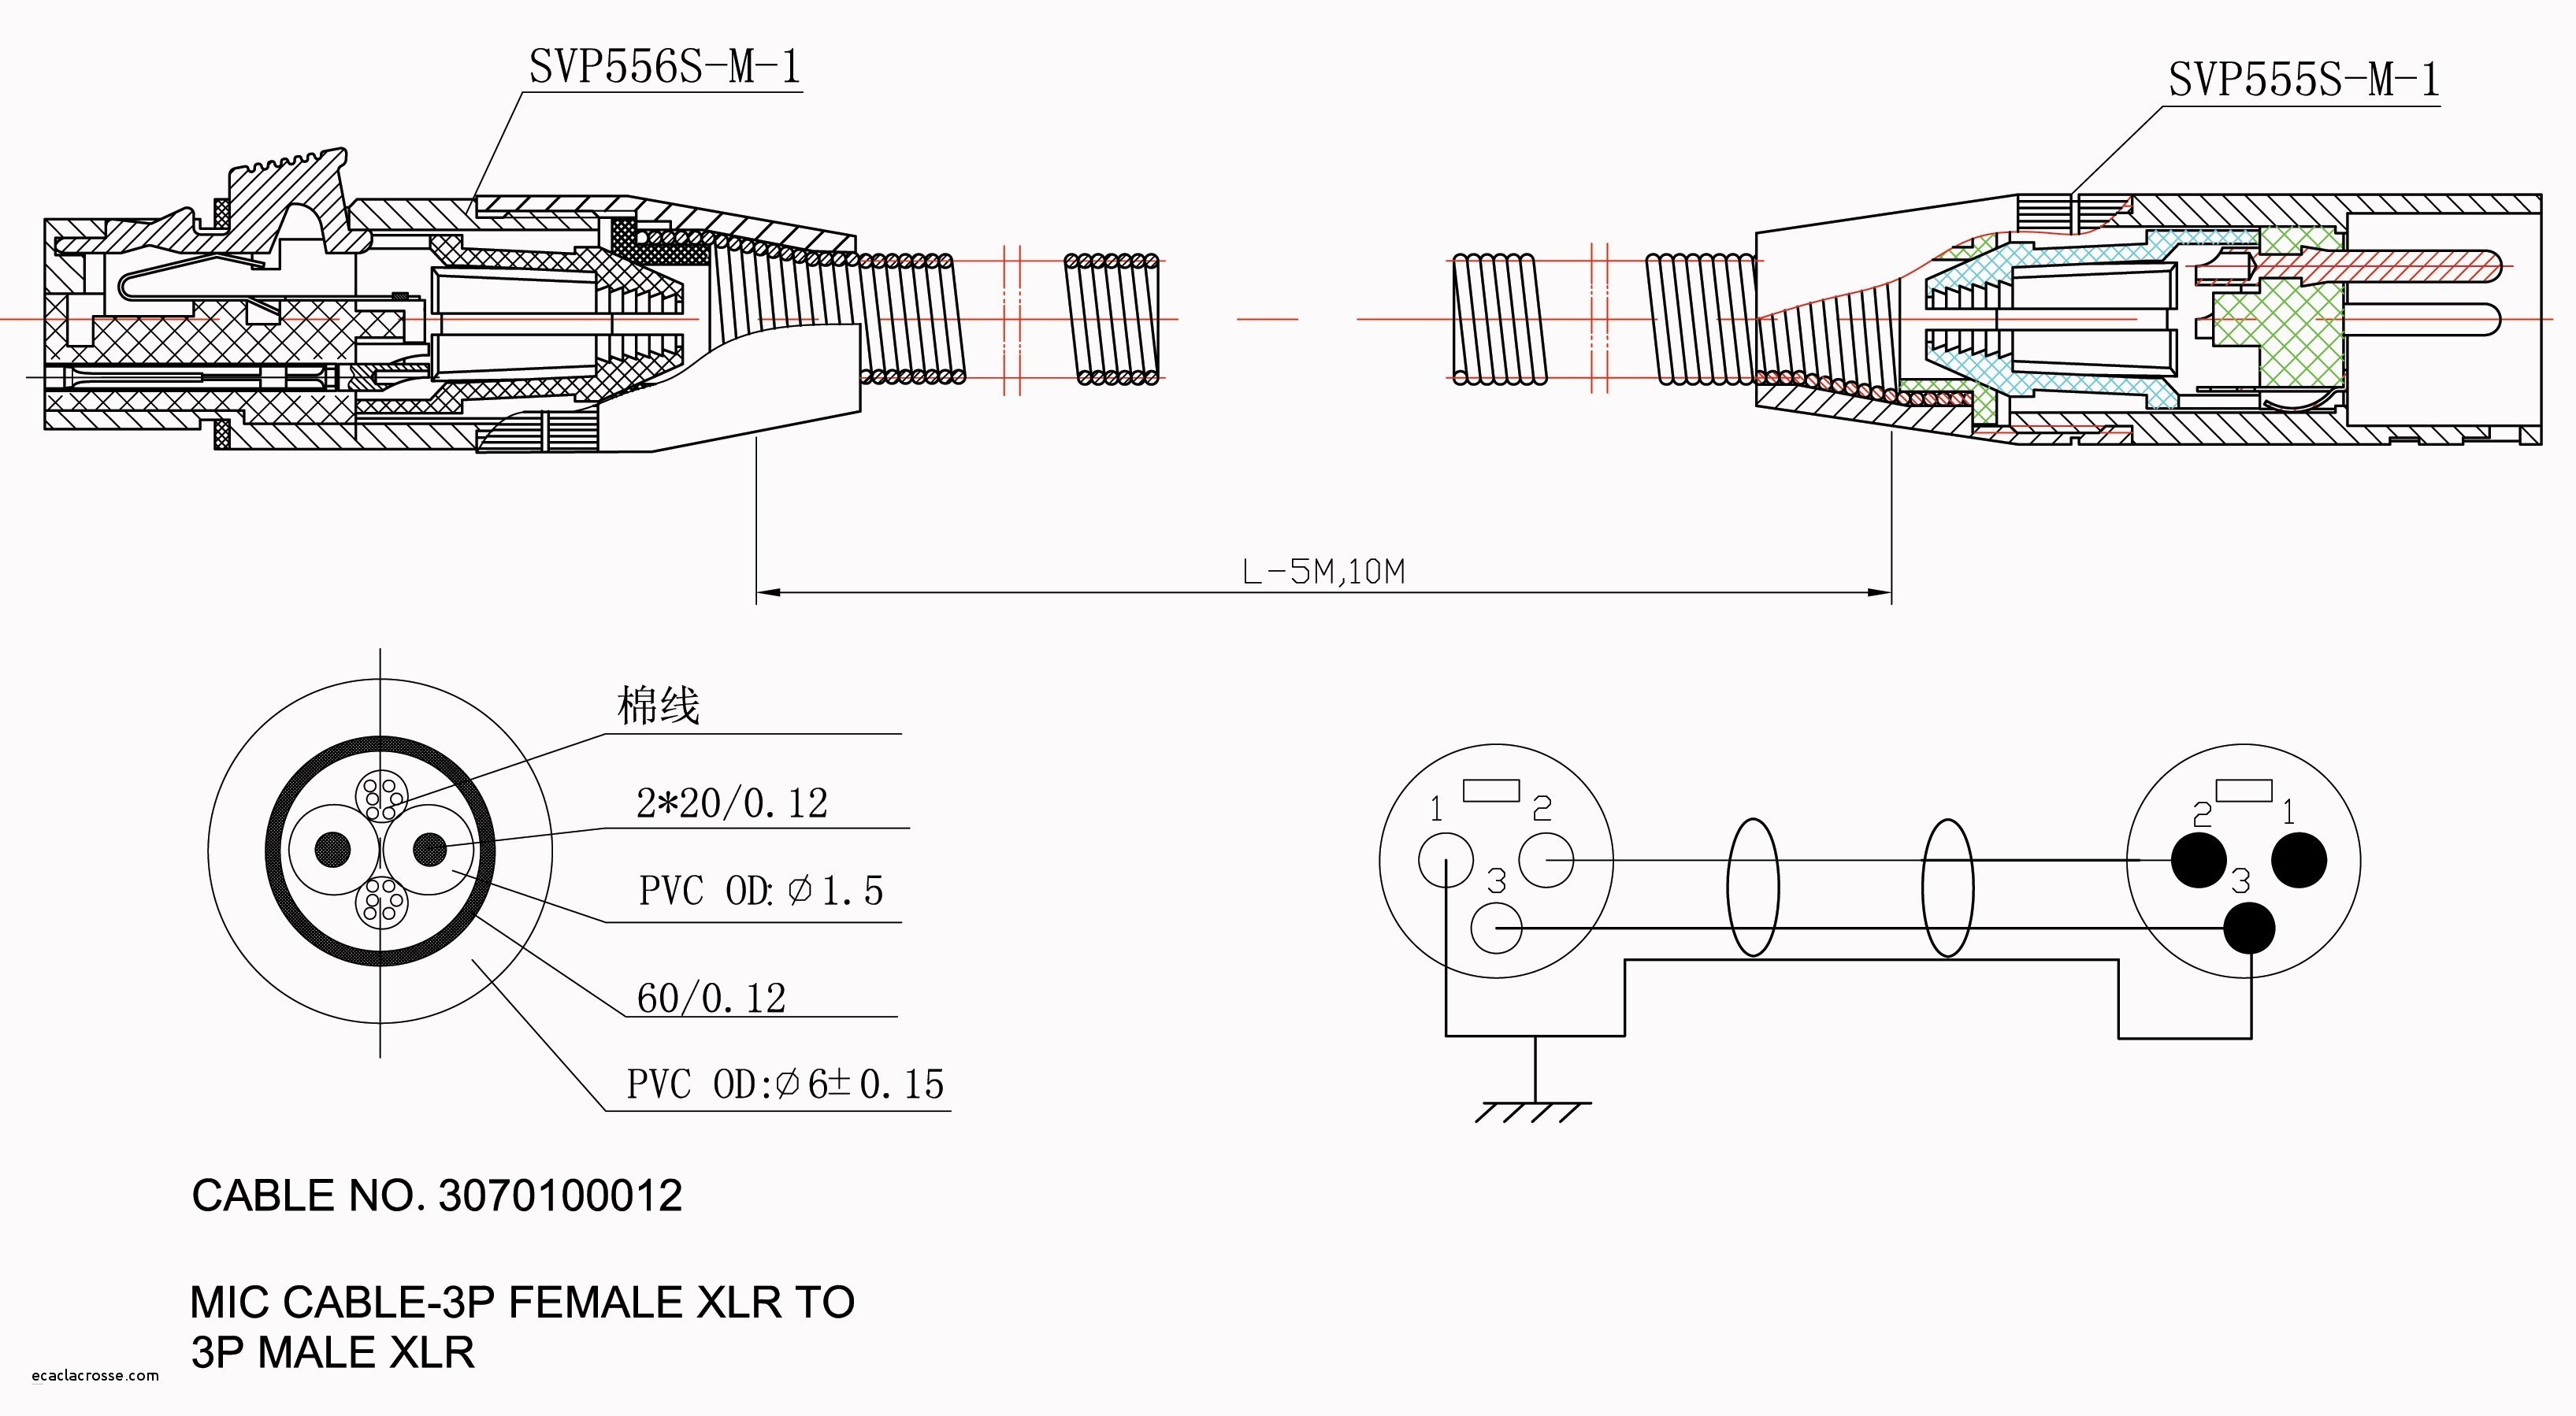 Toyota Avalon Engine Diagram Rj45 Diagram Pdf Layout Wiring Diagrams • Of Toyota Avalon Engine Diagram